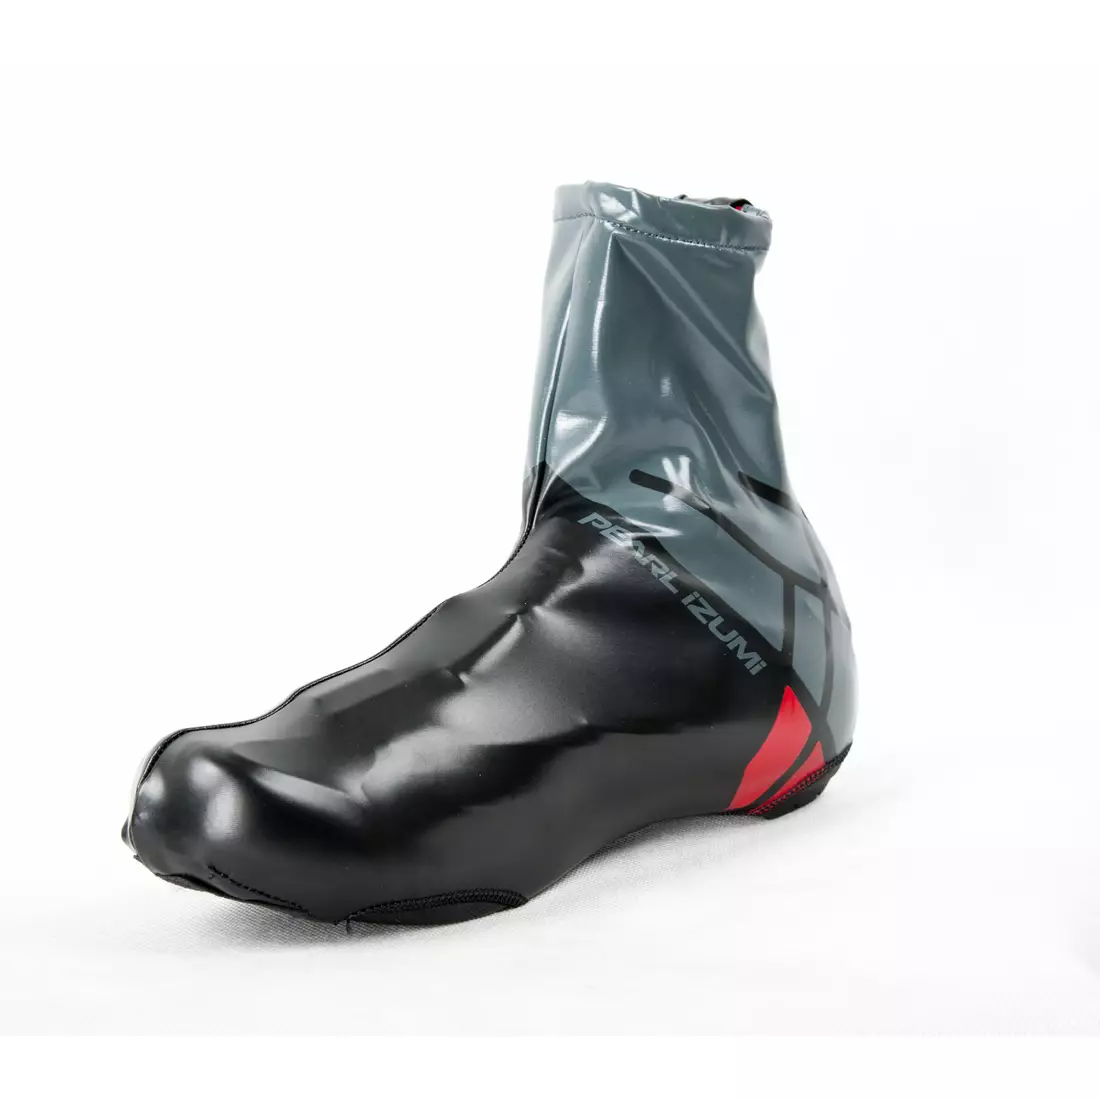 PEARL IZUMI PRO Barrier Lite 14381407-021 - road shoe protectors, color: Black